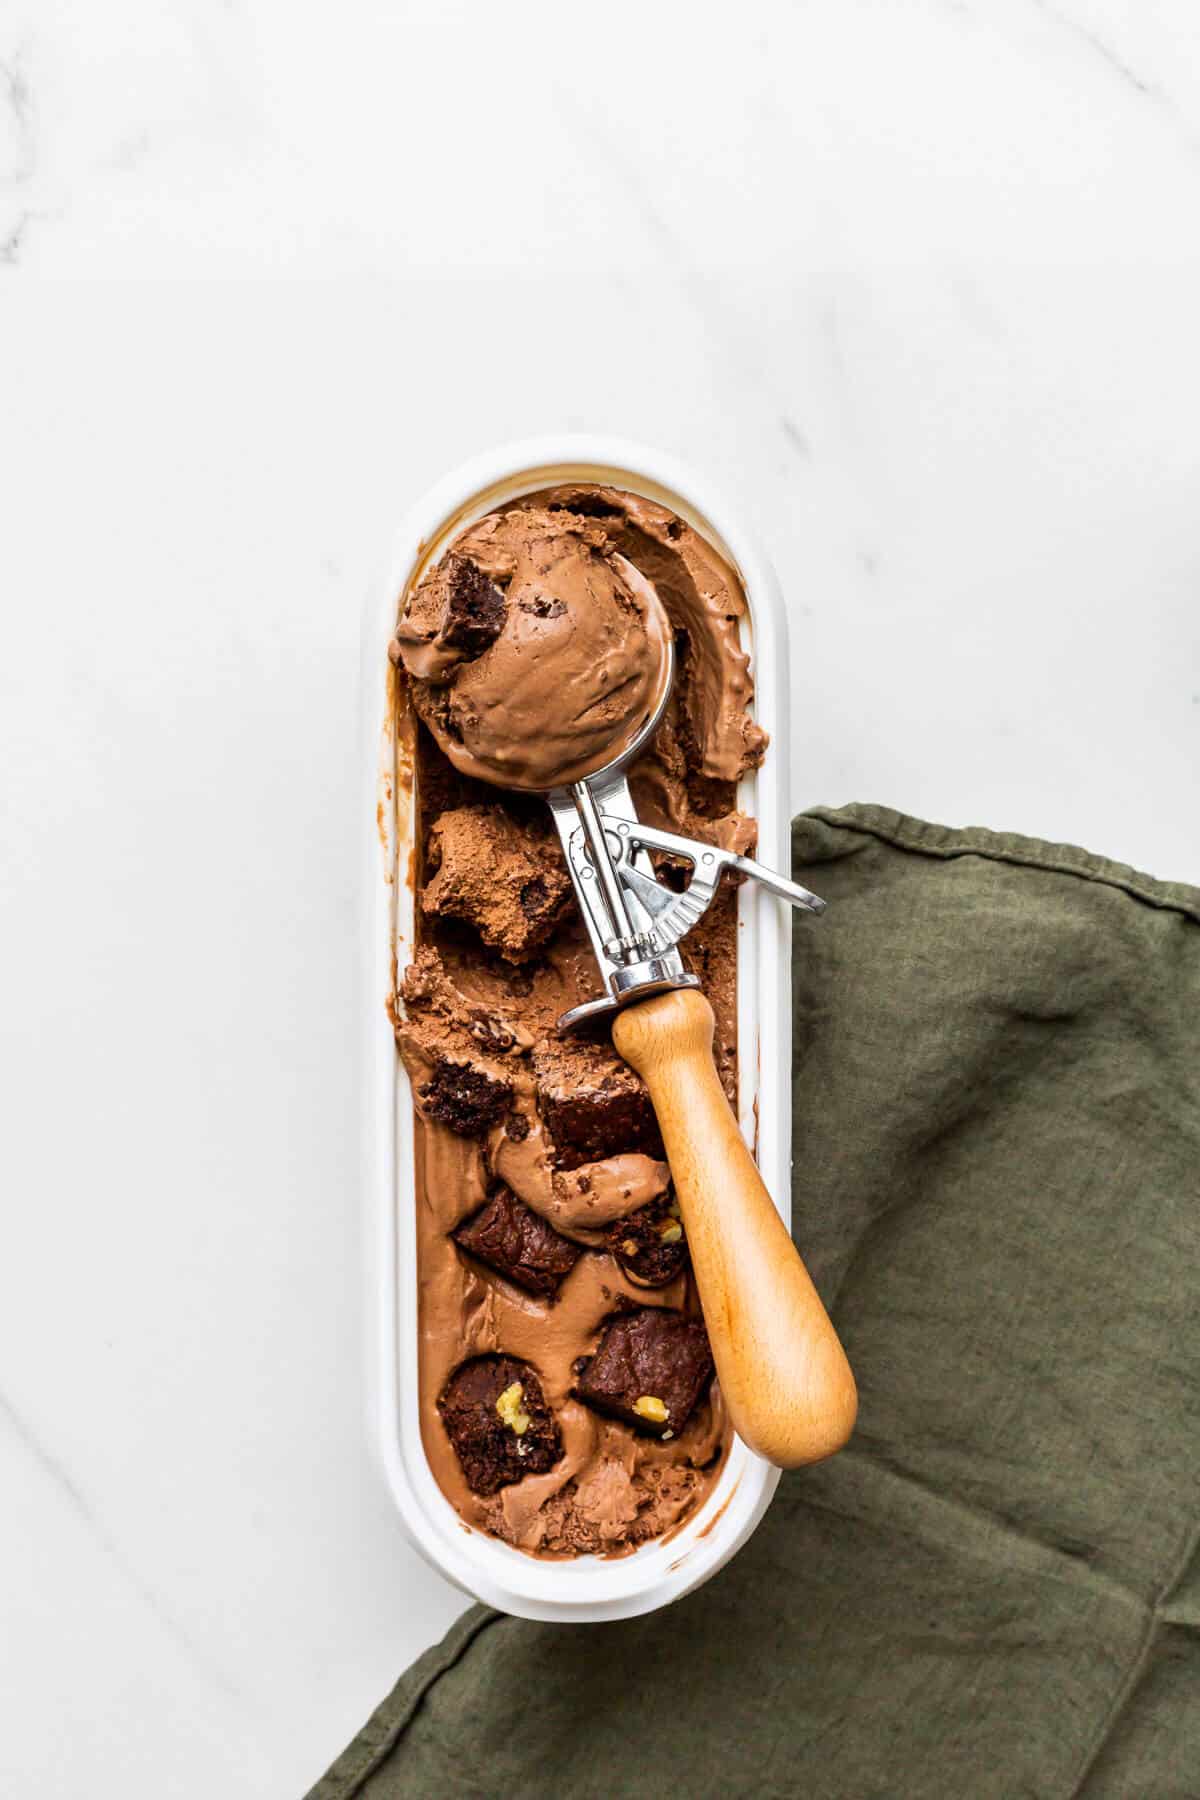 https://bakeschool.com/wp-content/uploads/2022/08/Chocolate-ice-cream-with-brownies.jpg